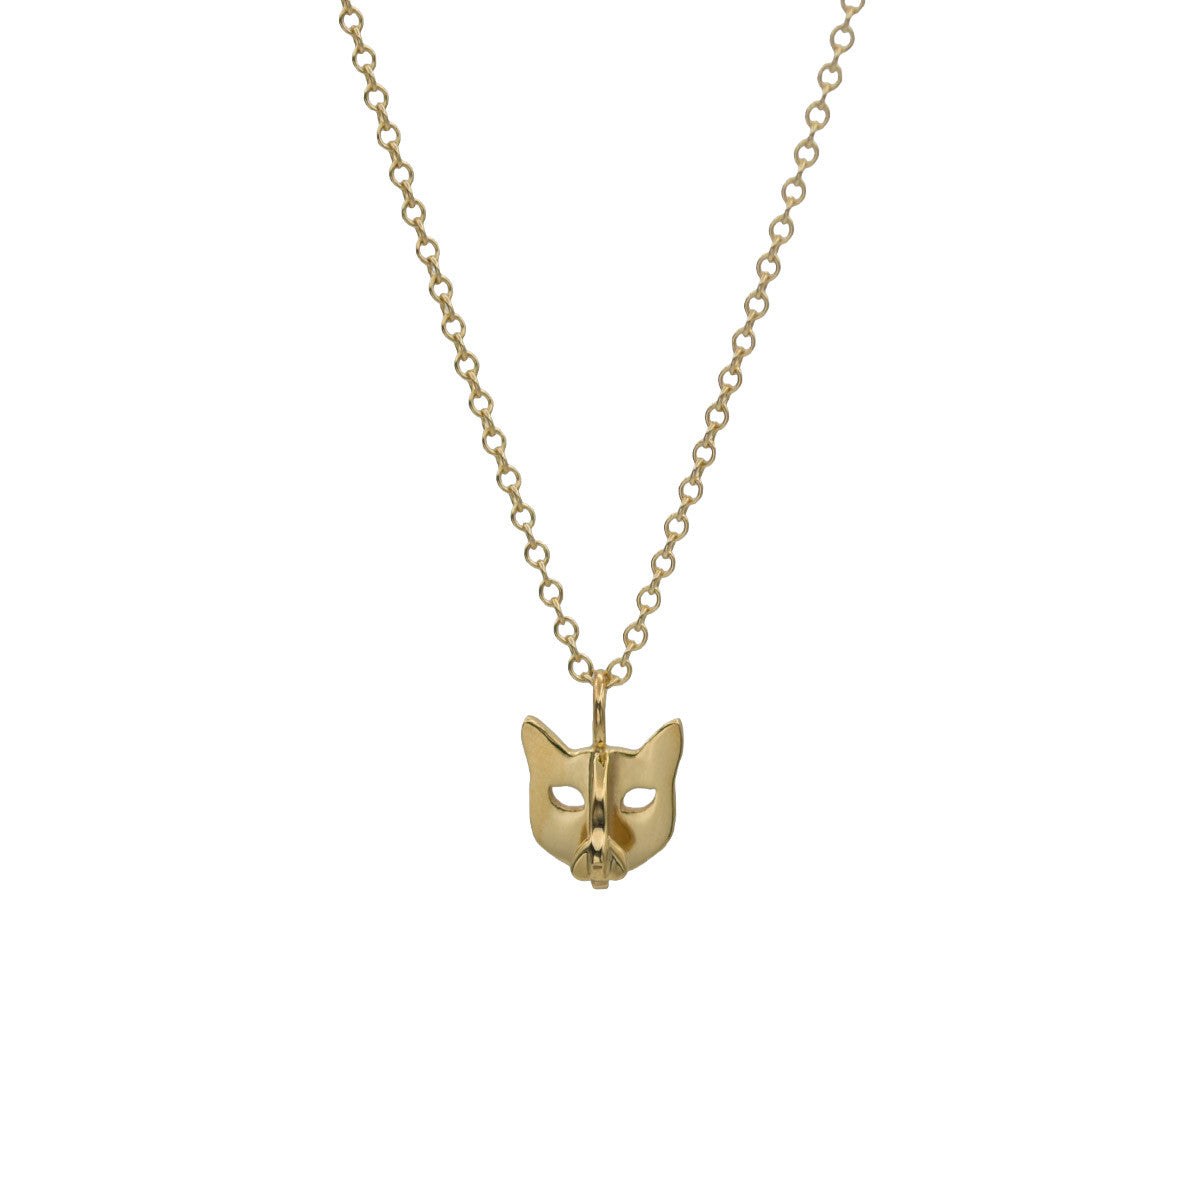 mini cat head necklace in 14k gold filled